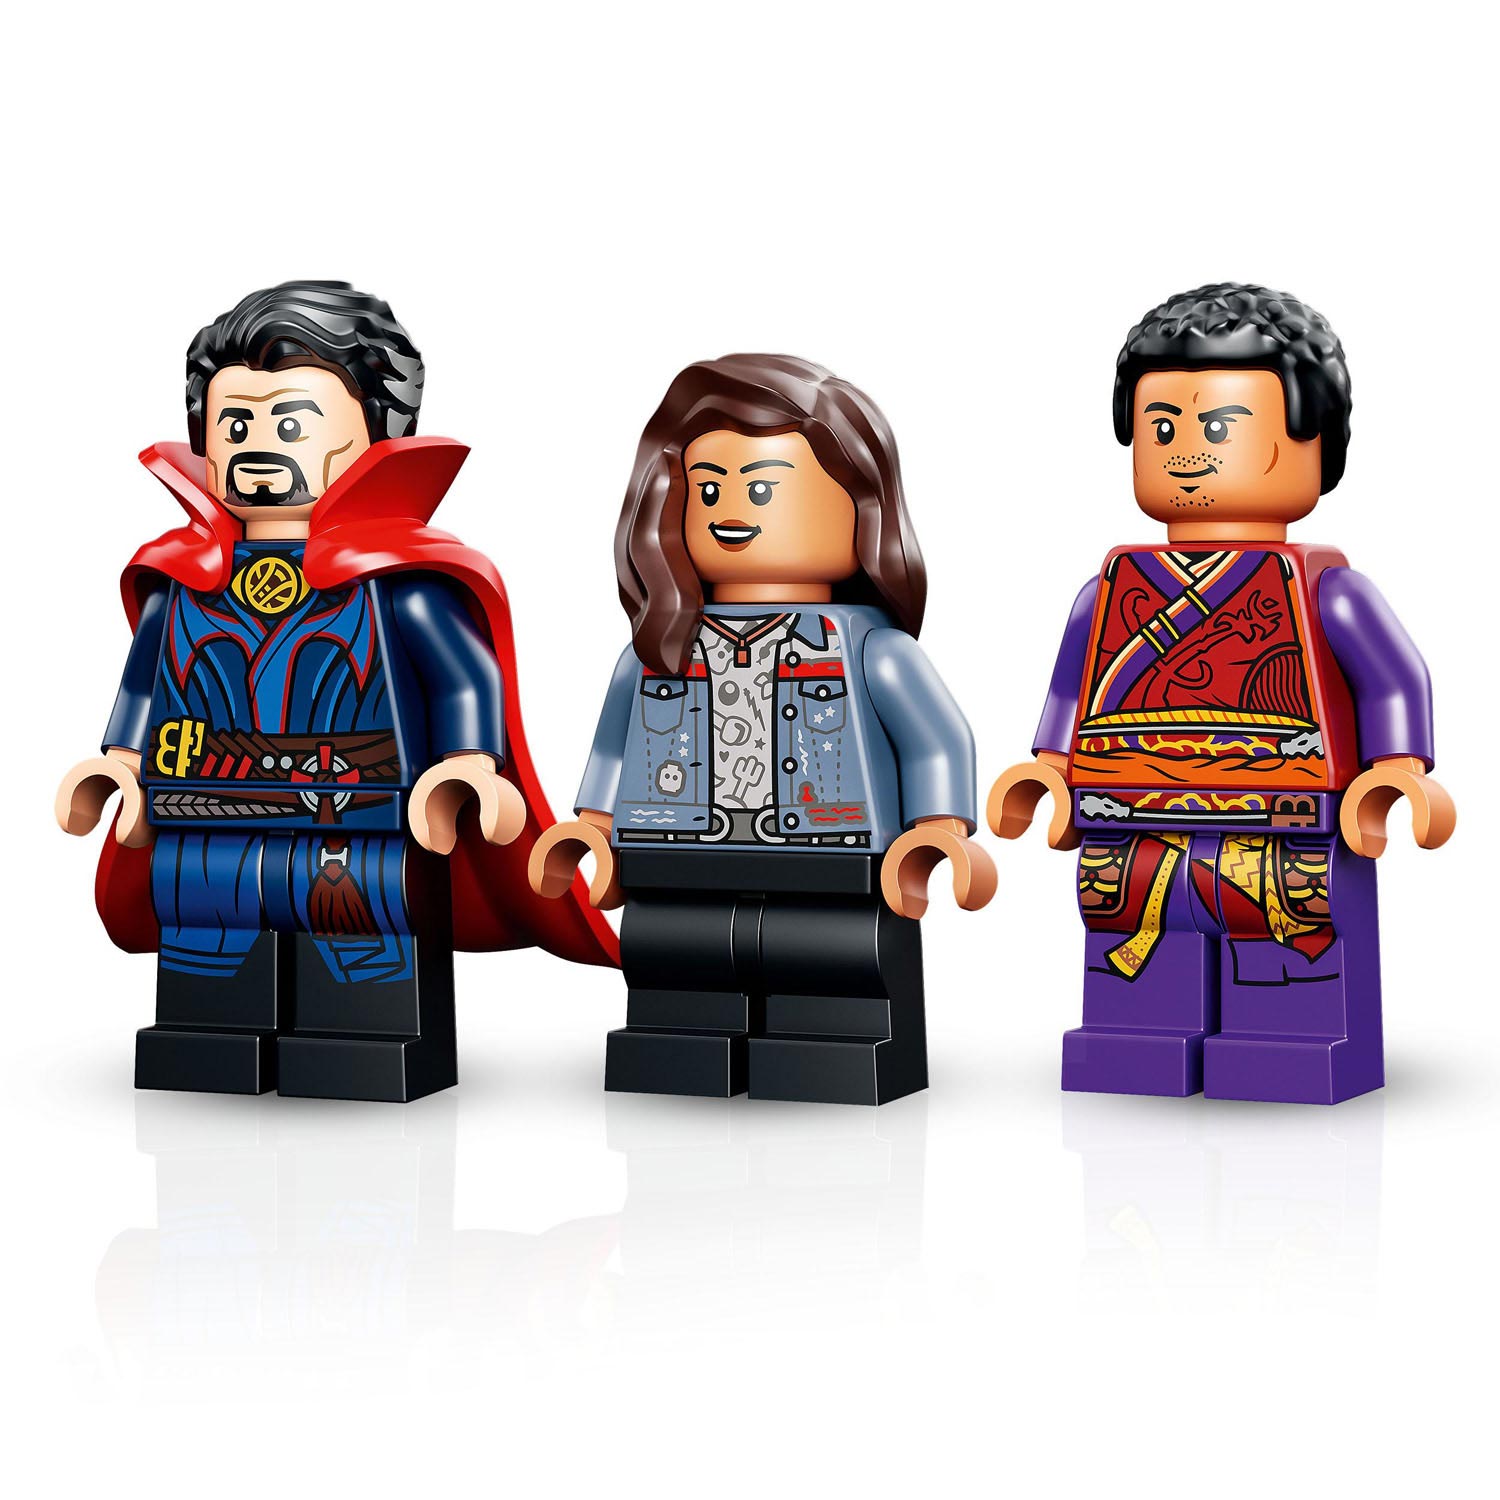 LEGO Super Heroes 76205 Gargantos duel